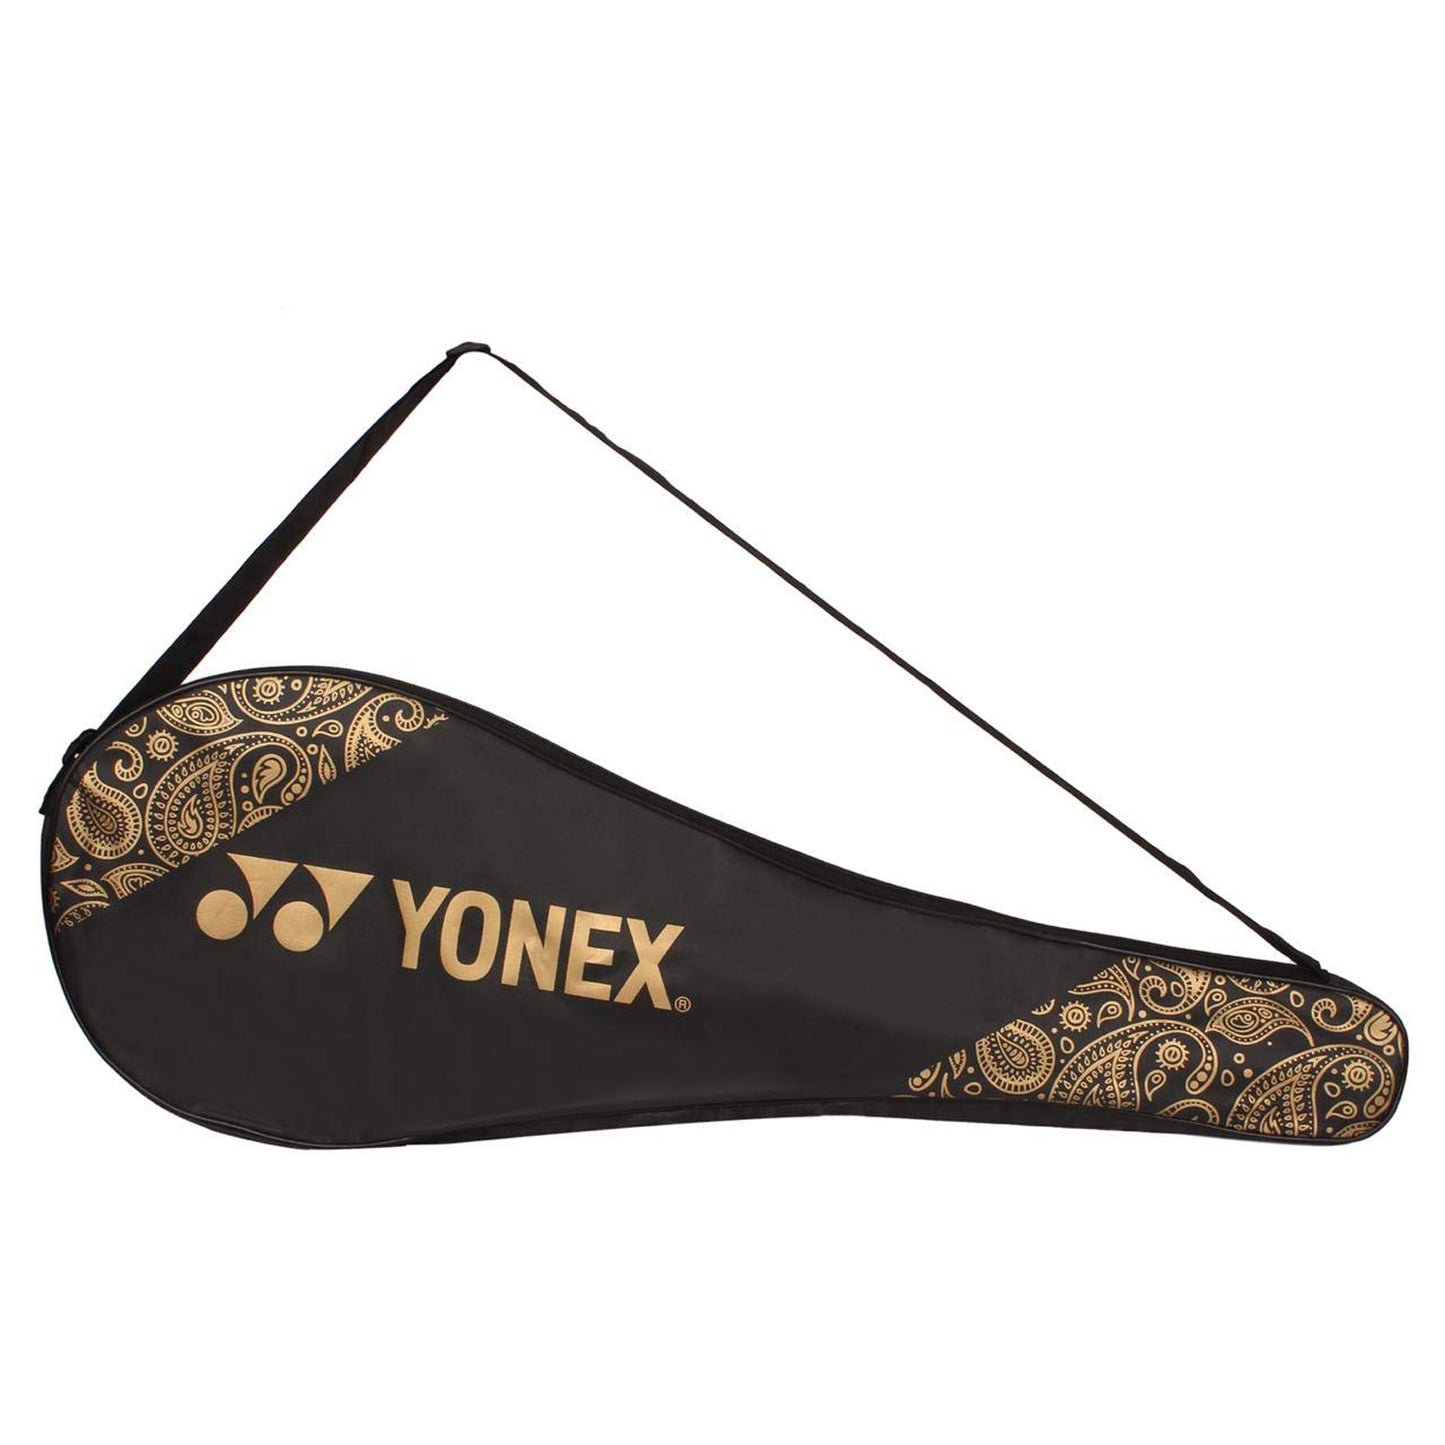 Yonex ZR 111 Light Aluminium Badminton Racquet with Full Cover, Grey - Best Price online Prokicksports.com